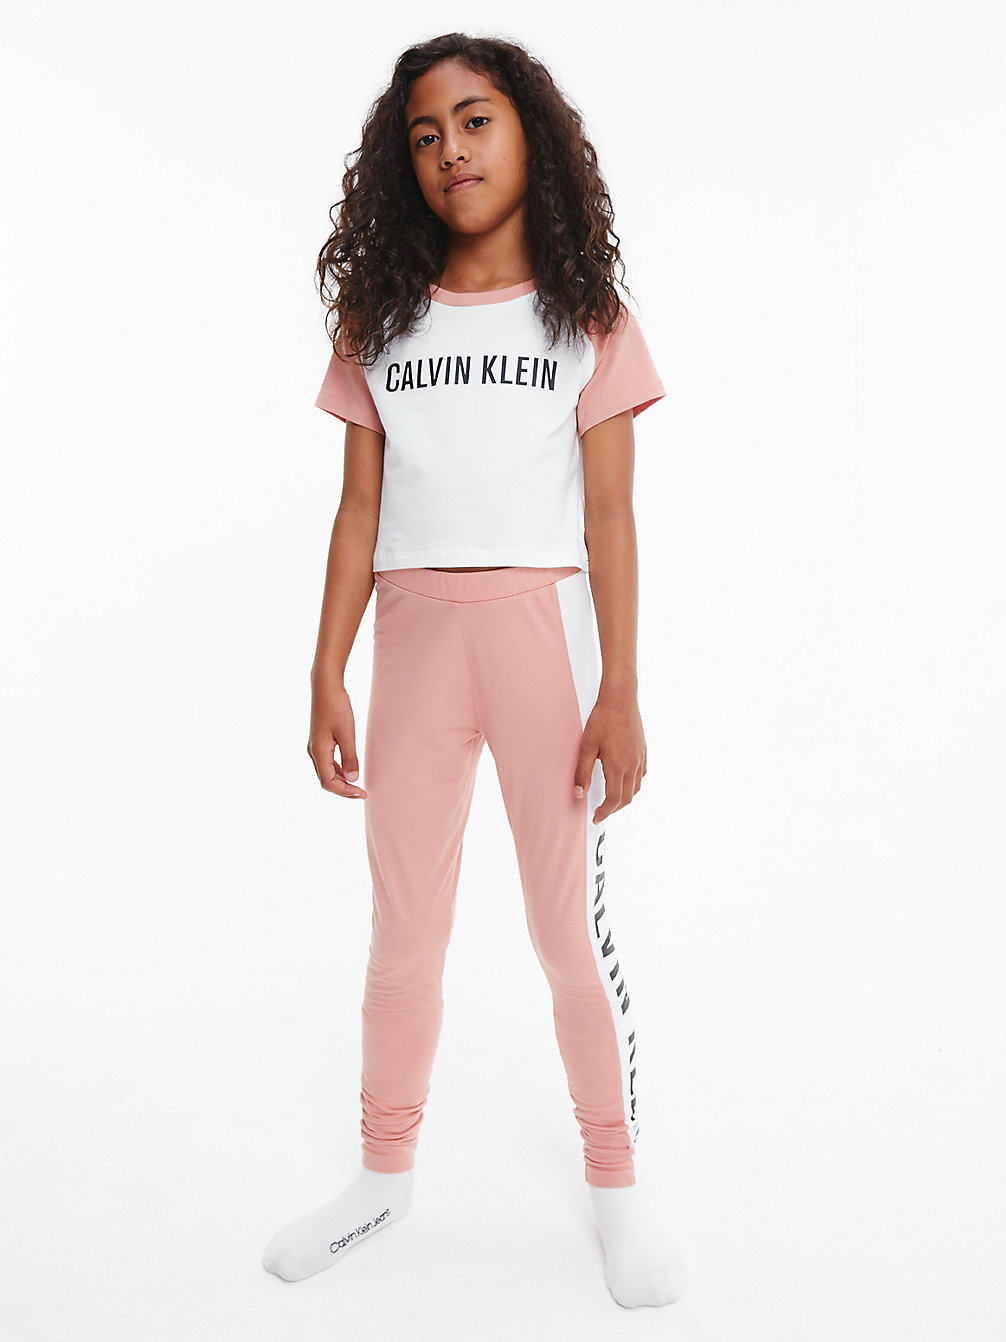 PINKMOCHA/W/PVHWHITE Pyjama Set - Intense Power undefined girls Calvin Klein